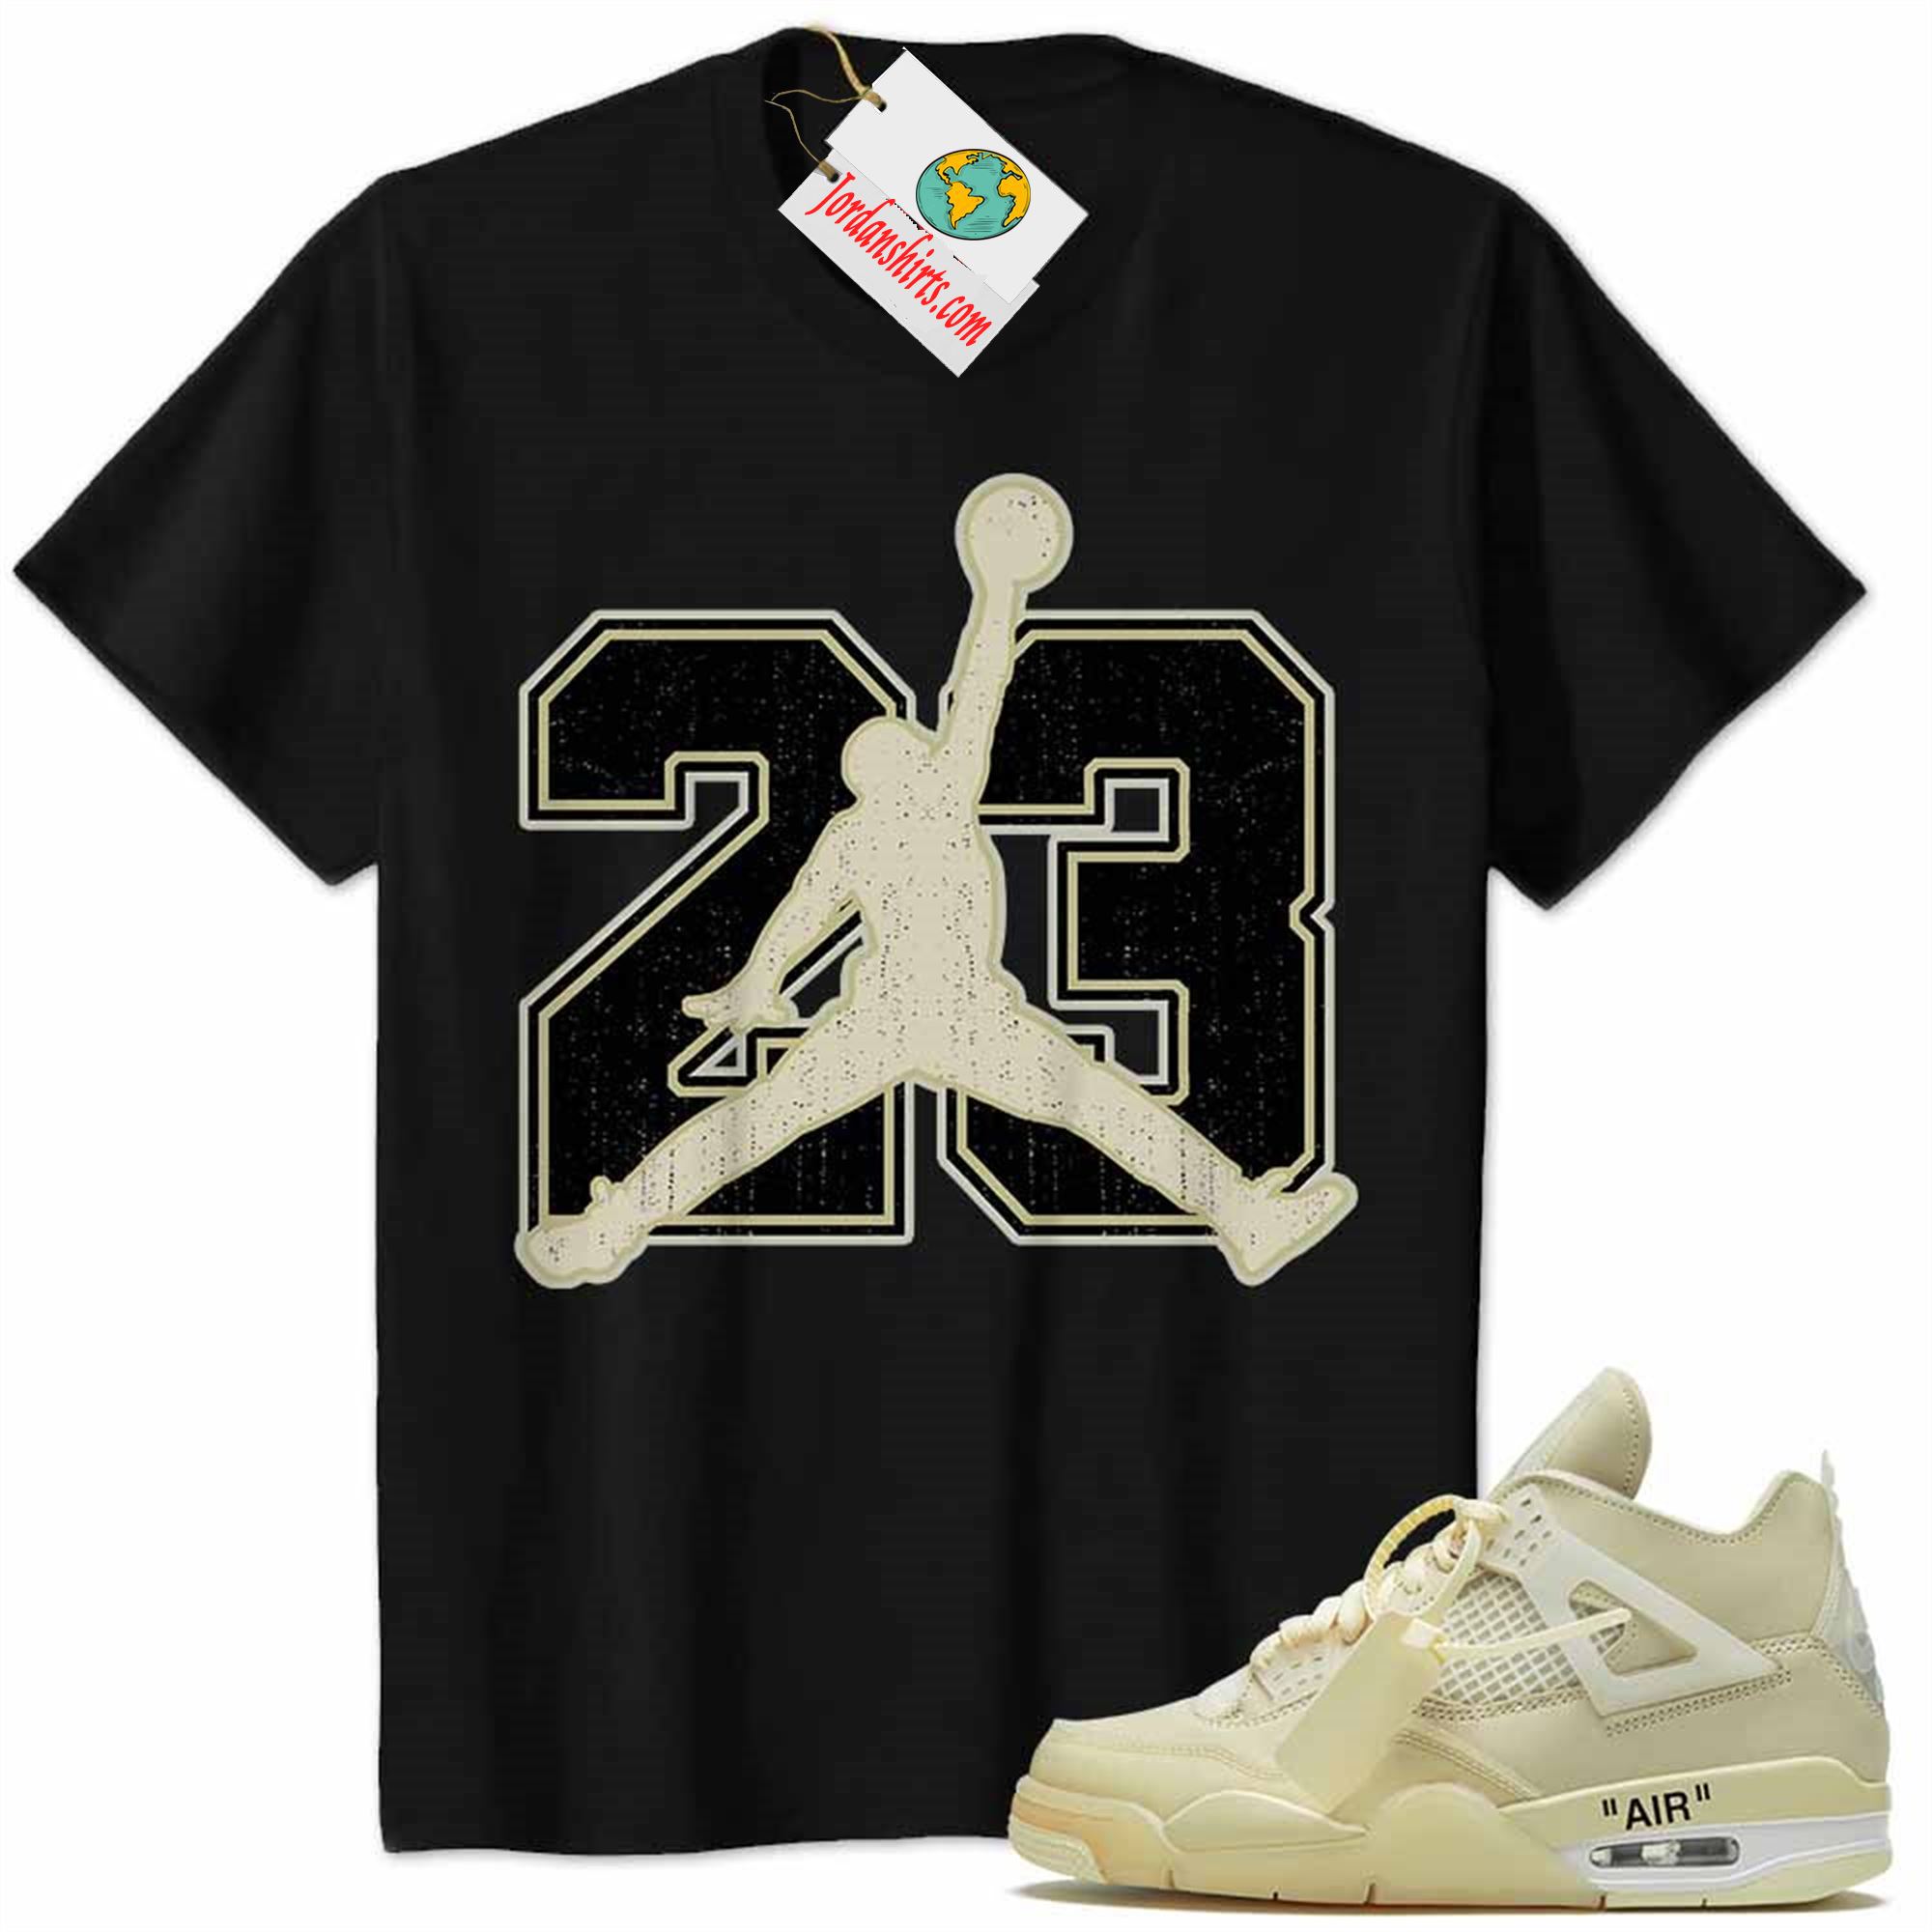 Jordan 4 Shirt, Jordan 4 Off-white Sail Shirt Jumpman No23 Black Size Up To 5xl